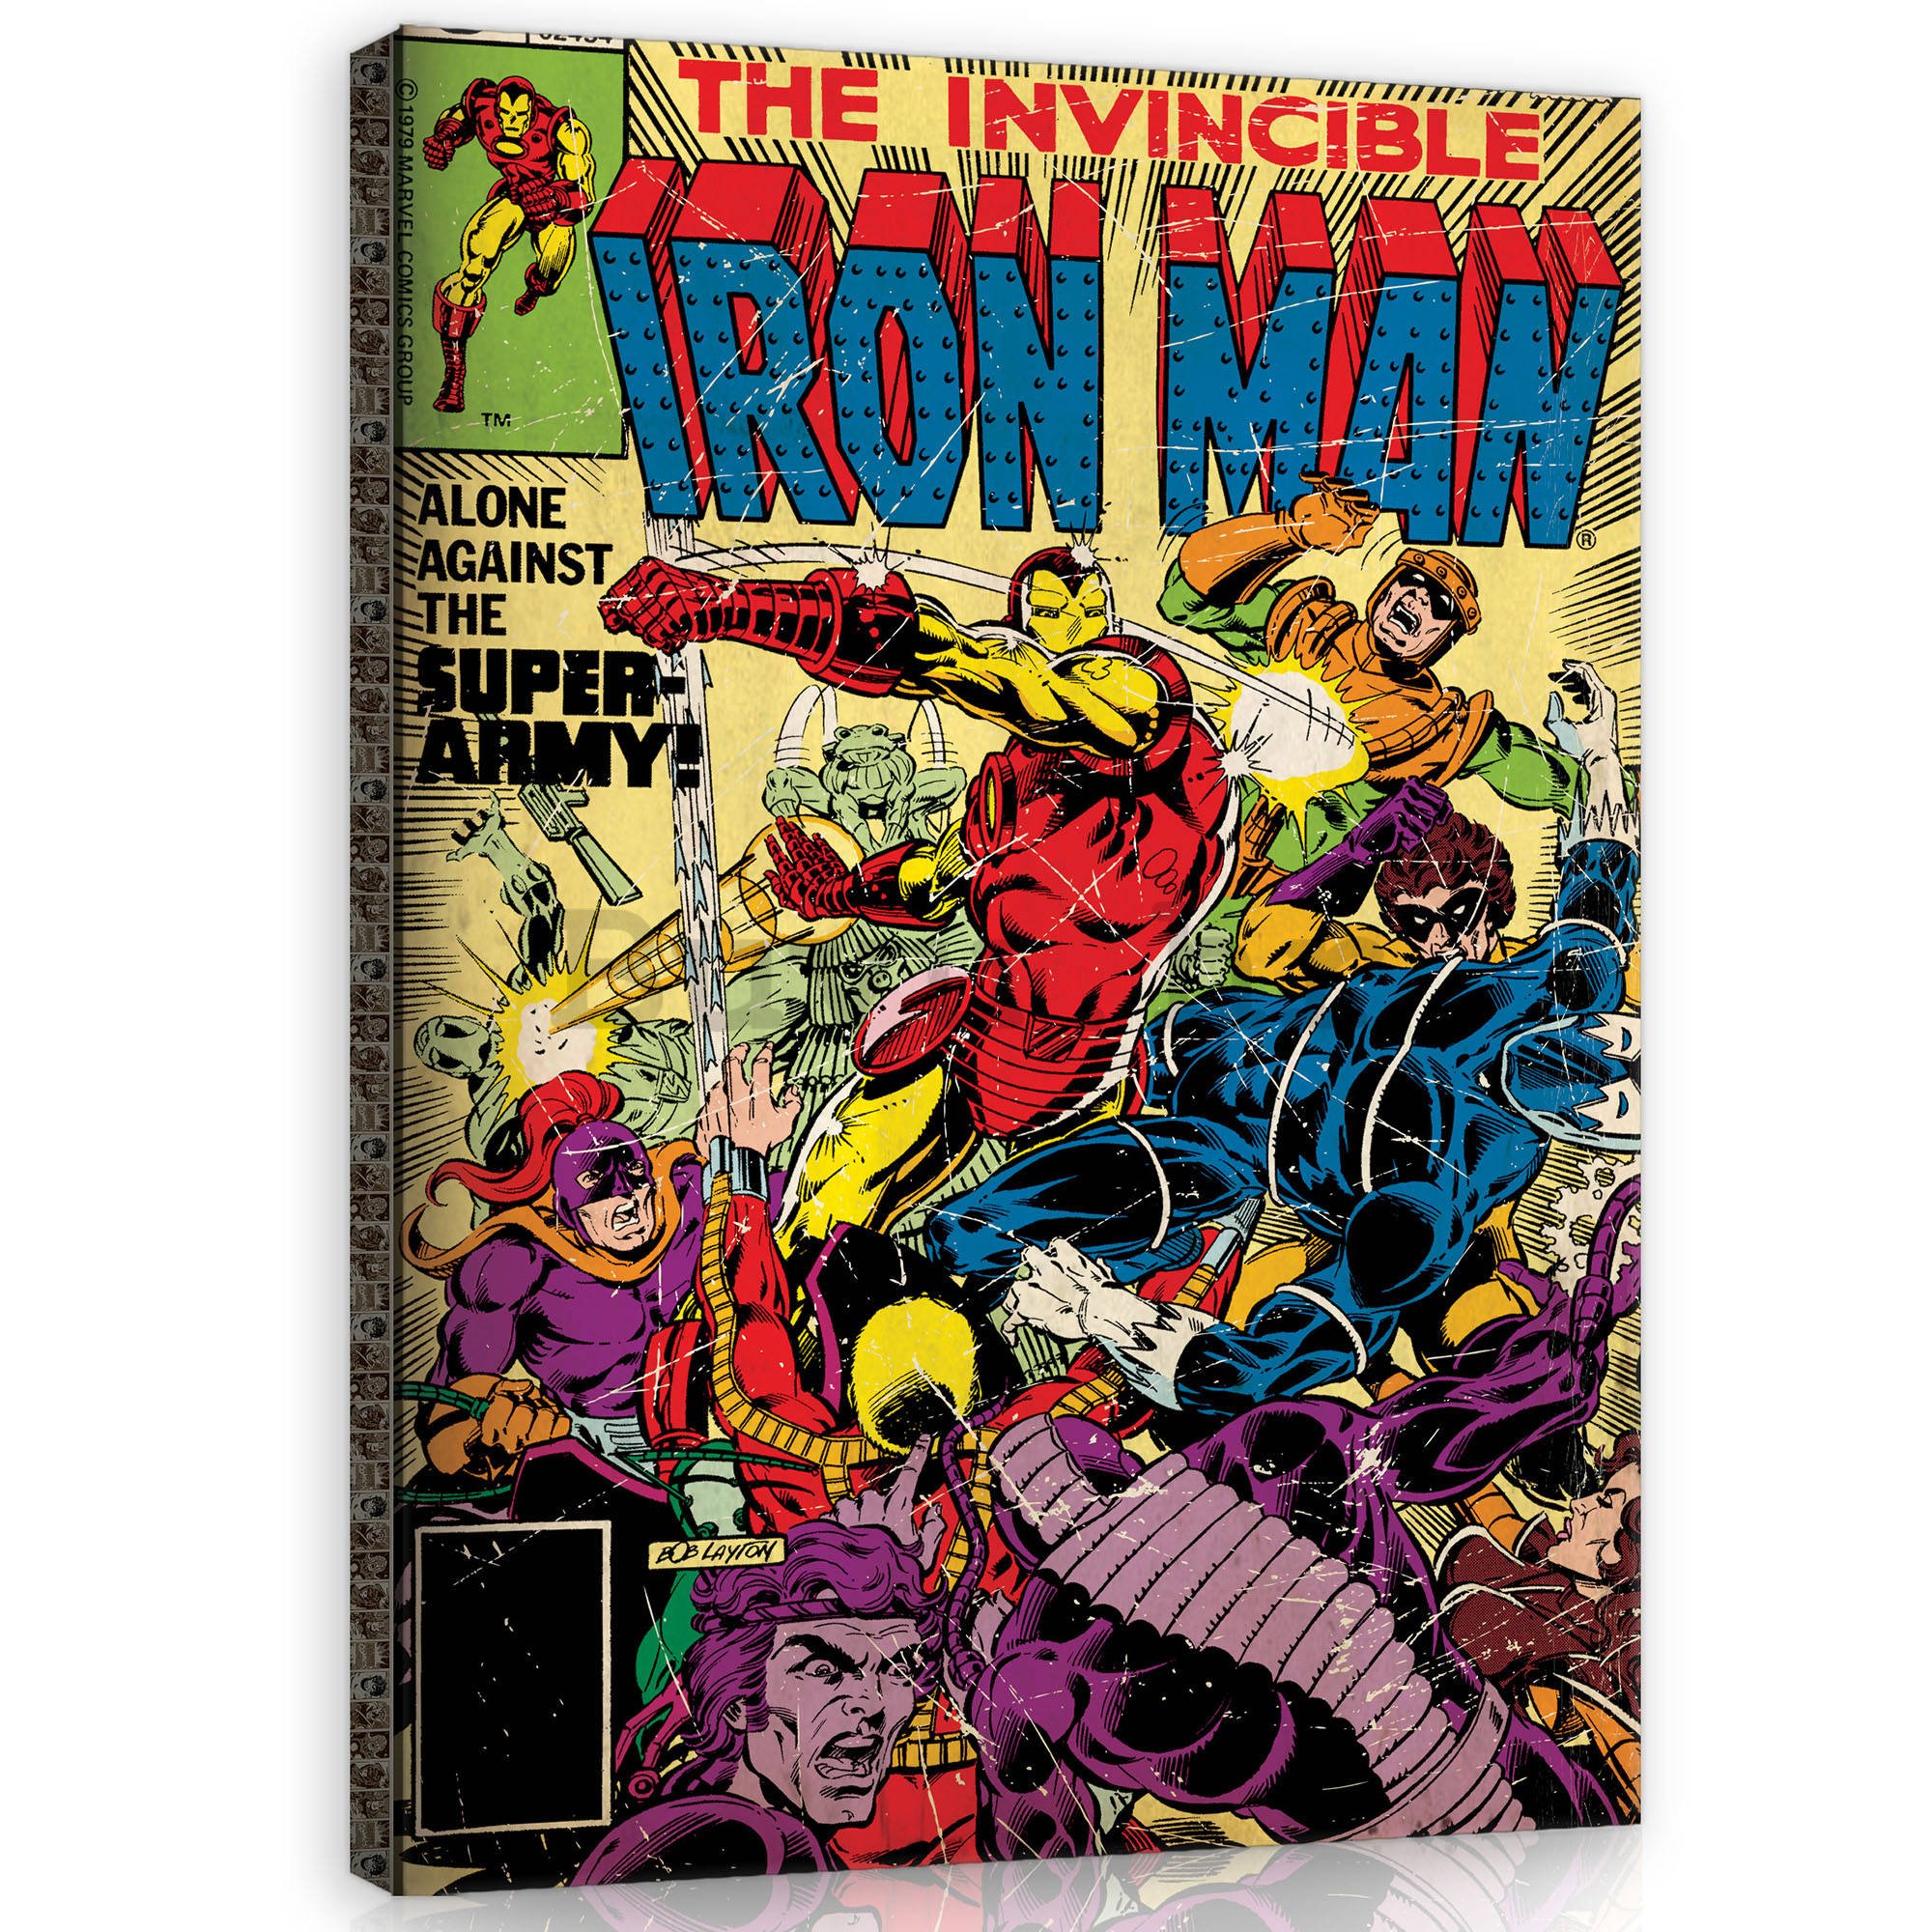 Slika na platnu: The Invincible Iron Man (Alone Against the Super-Army!) - 80x60 cm